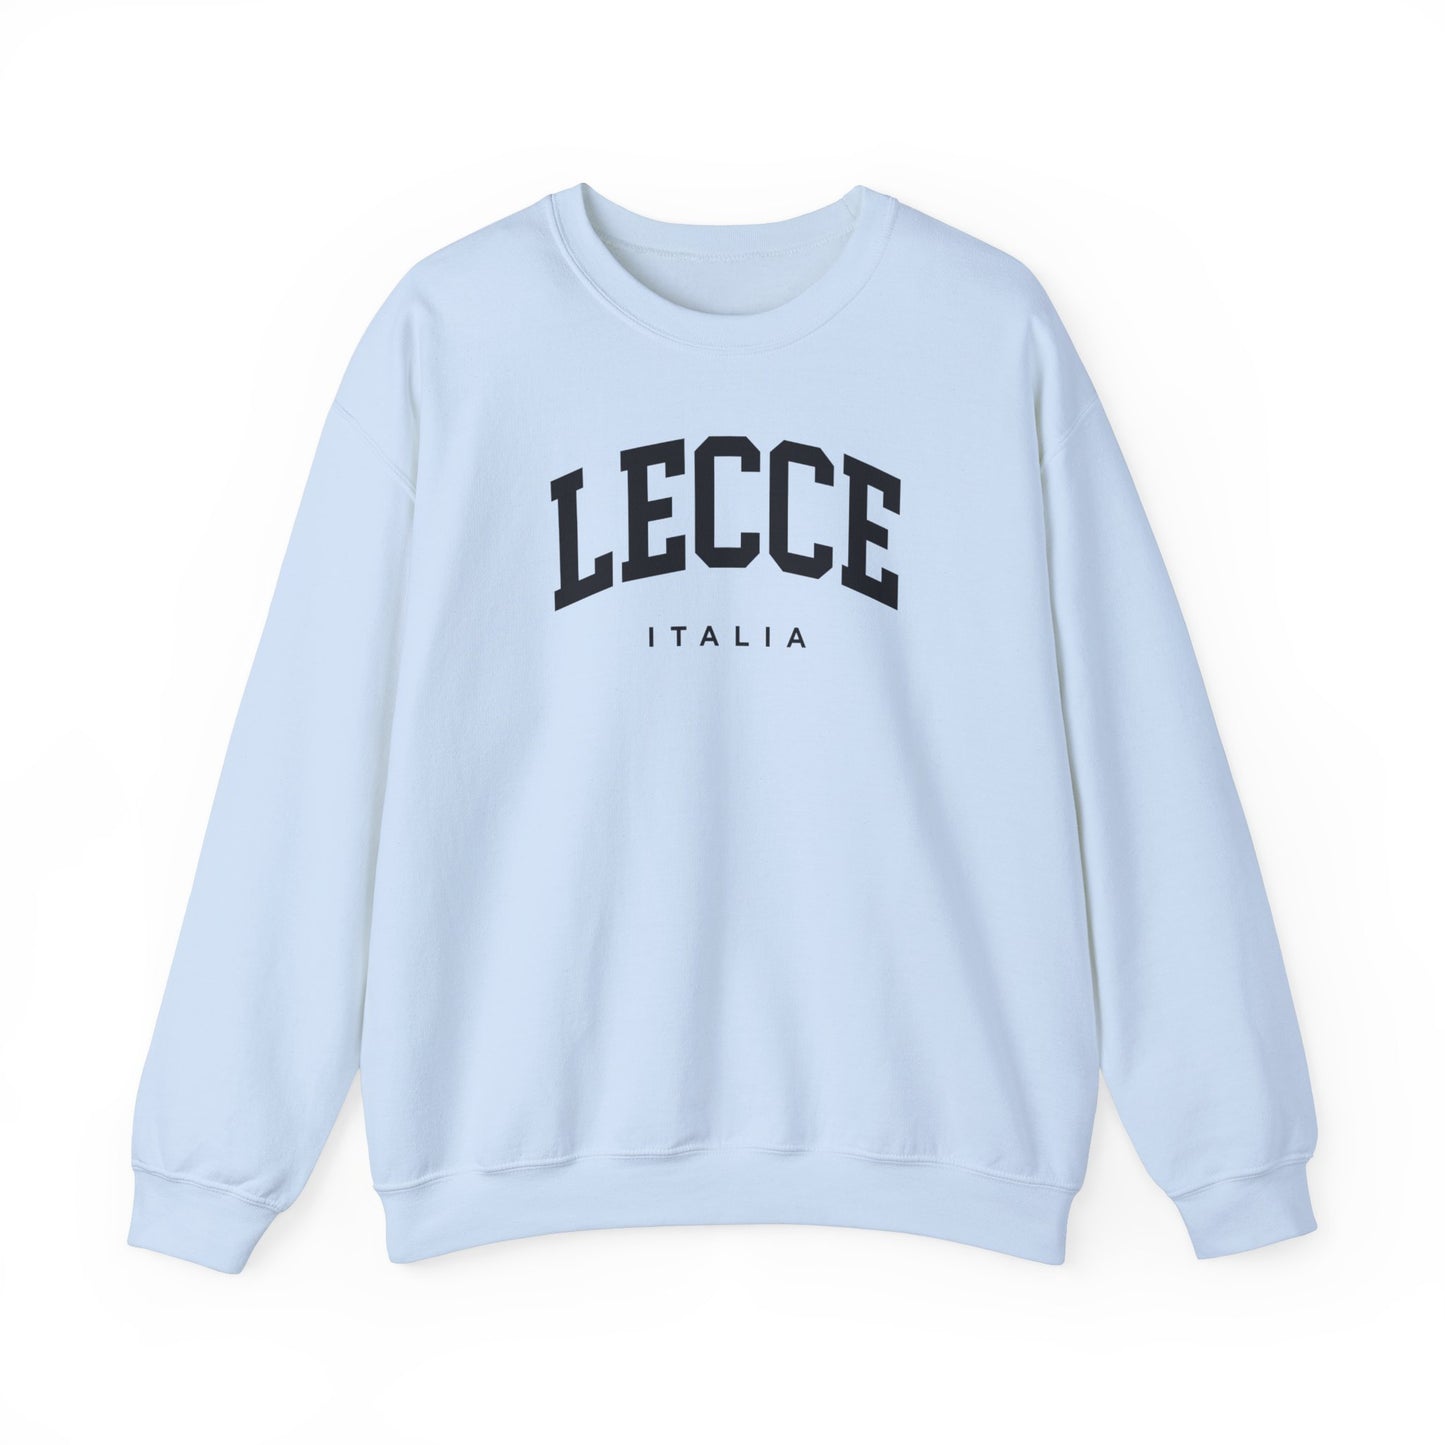 Lecce Italy Sweatshirt